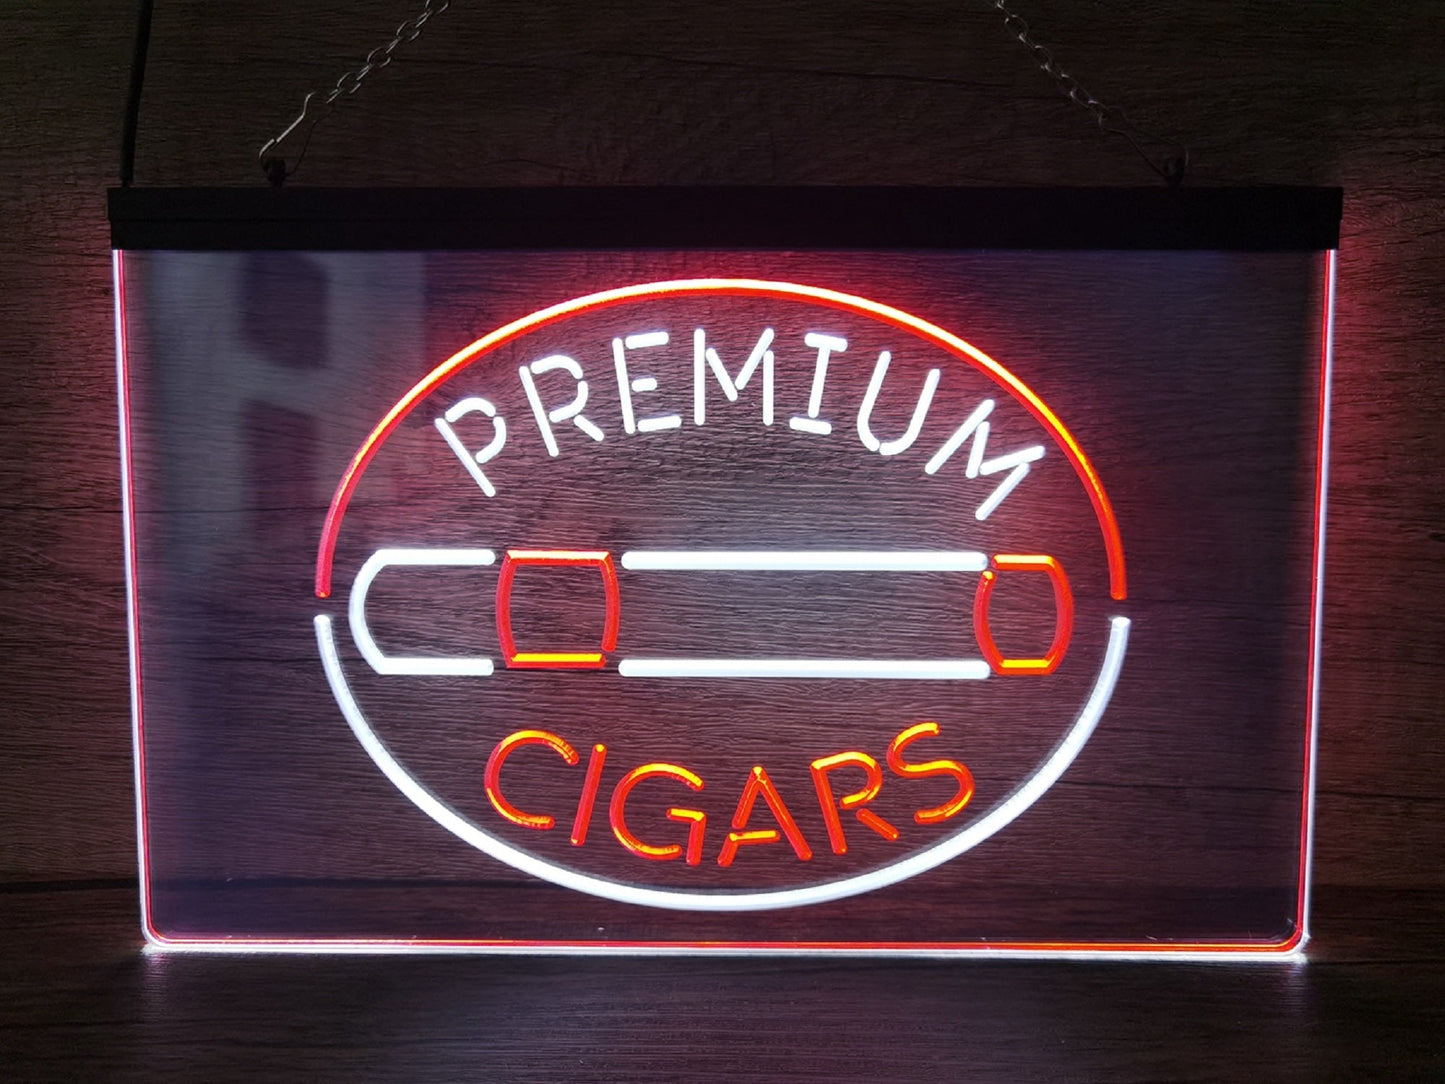 Neon Sign Dual Color Premium Cigars Wall Desktop Cigar Lounge Decor